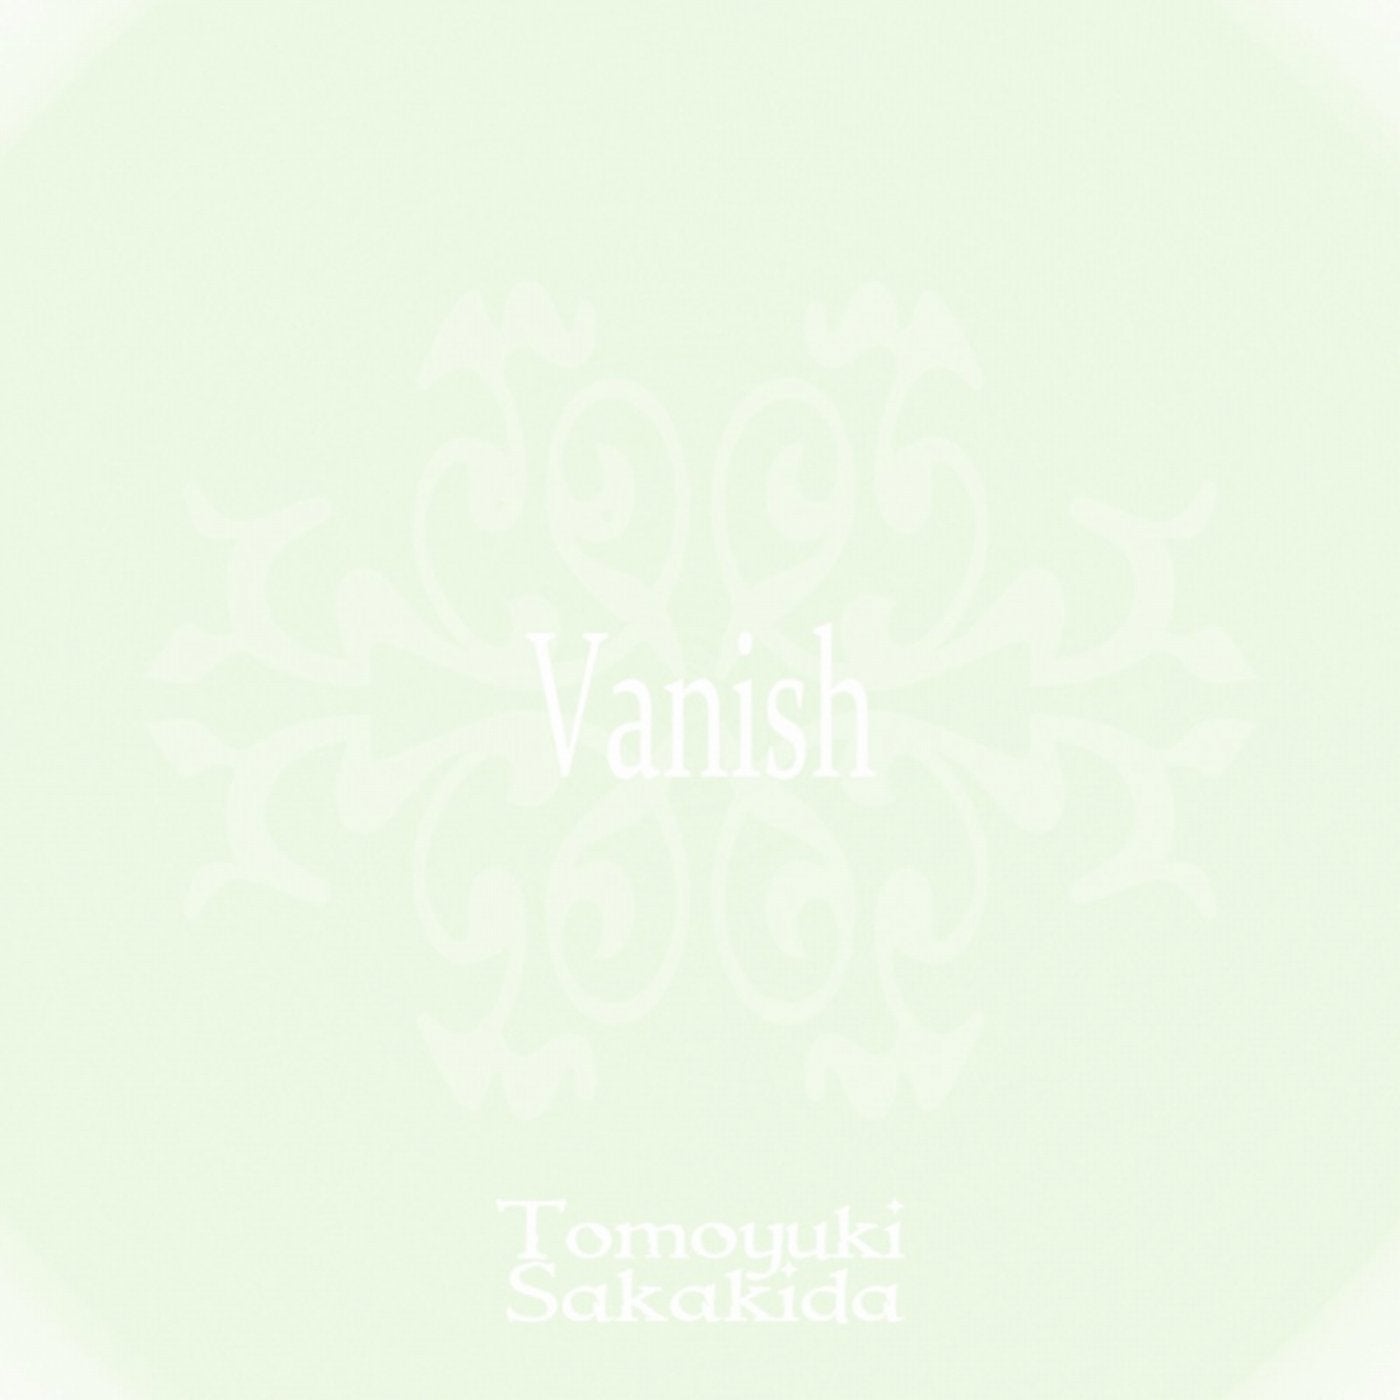 Vanish - Single